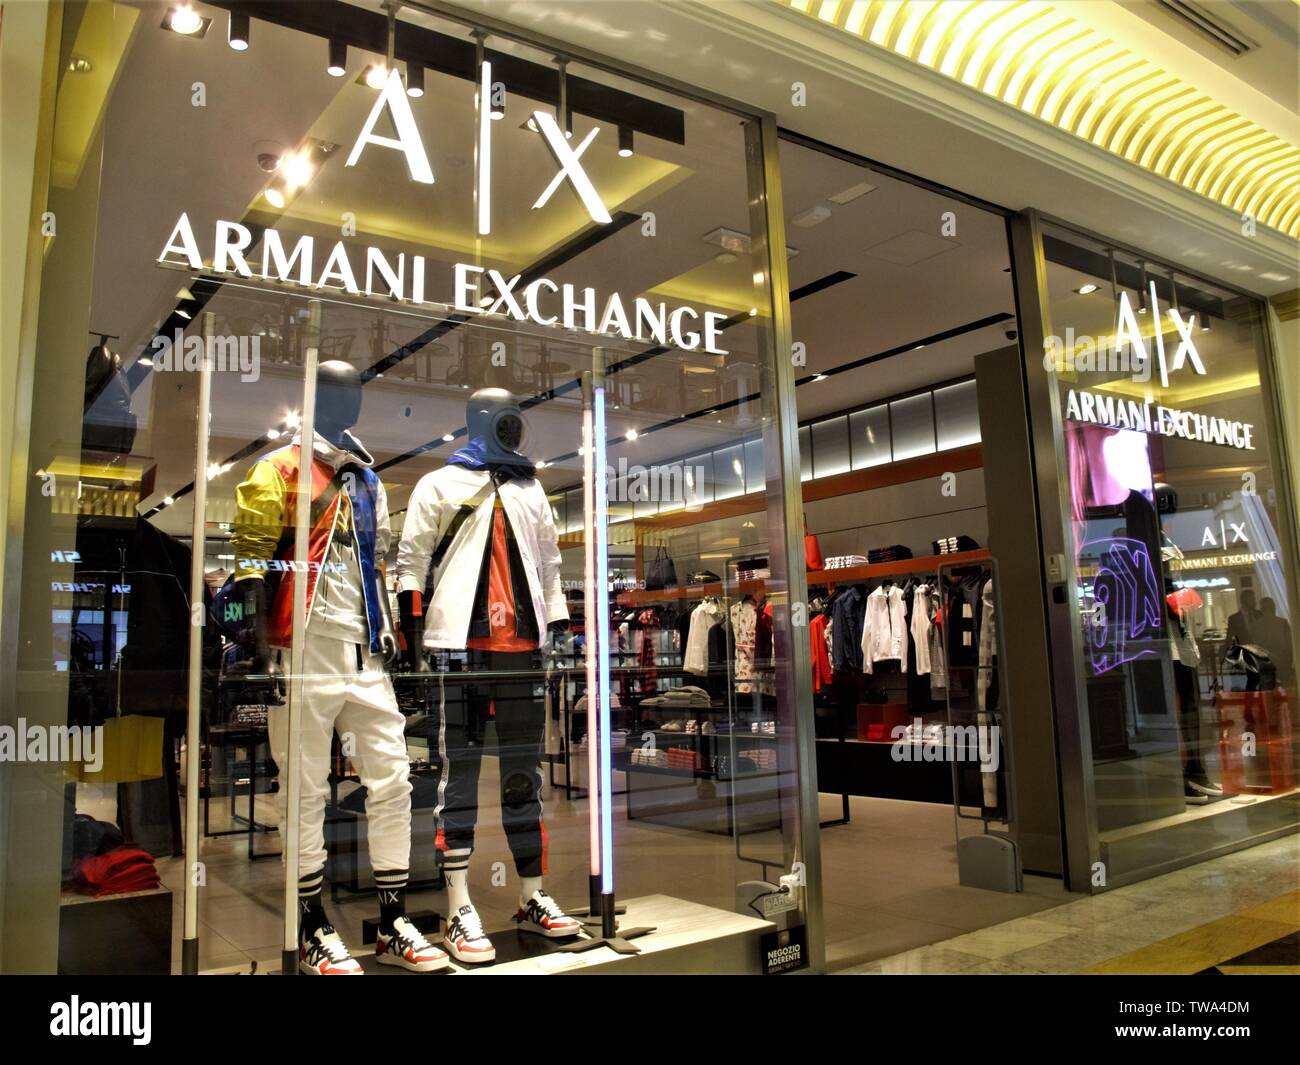 Armani Exchange Franchise